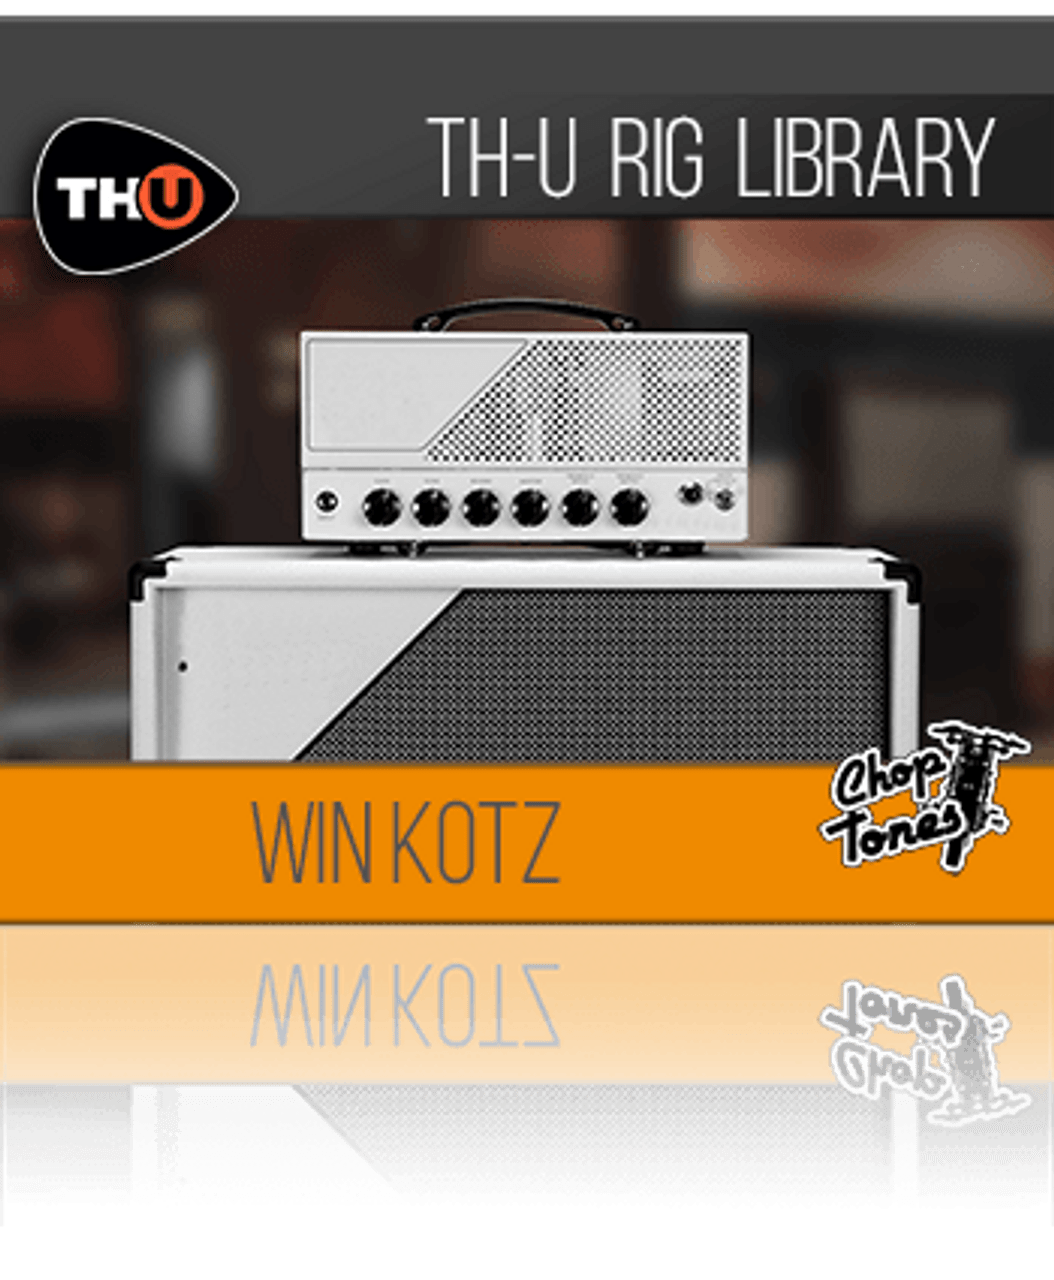 Choptones Win Kotz - Rig Library for TH-U